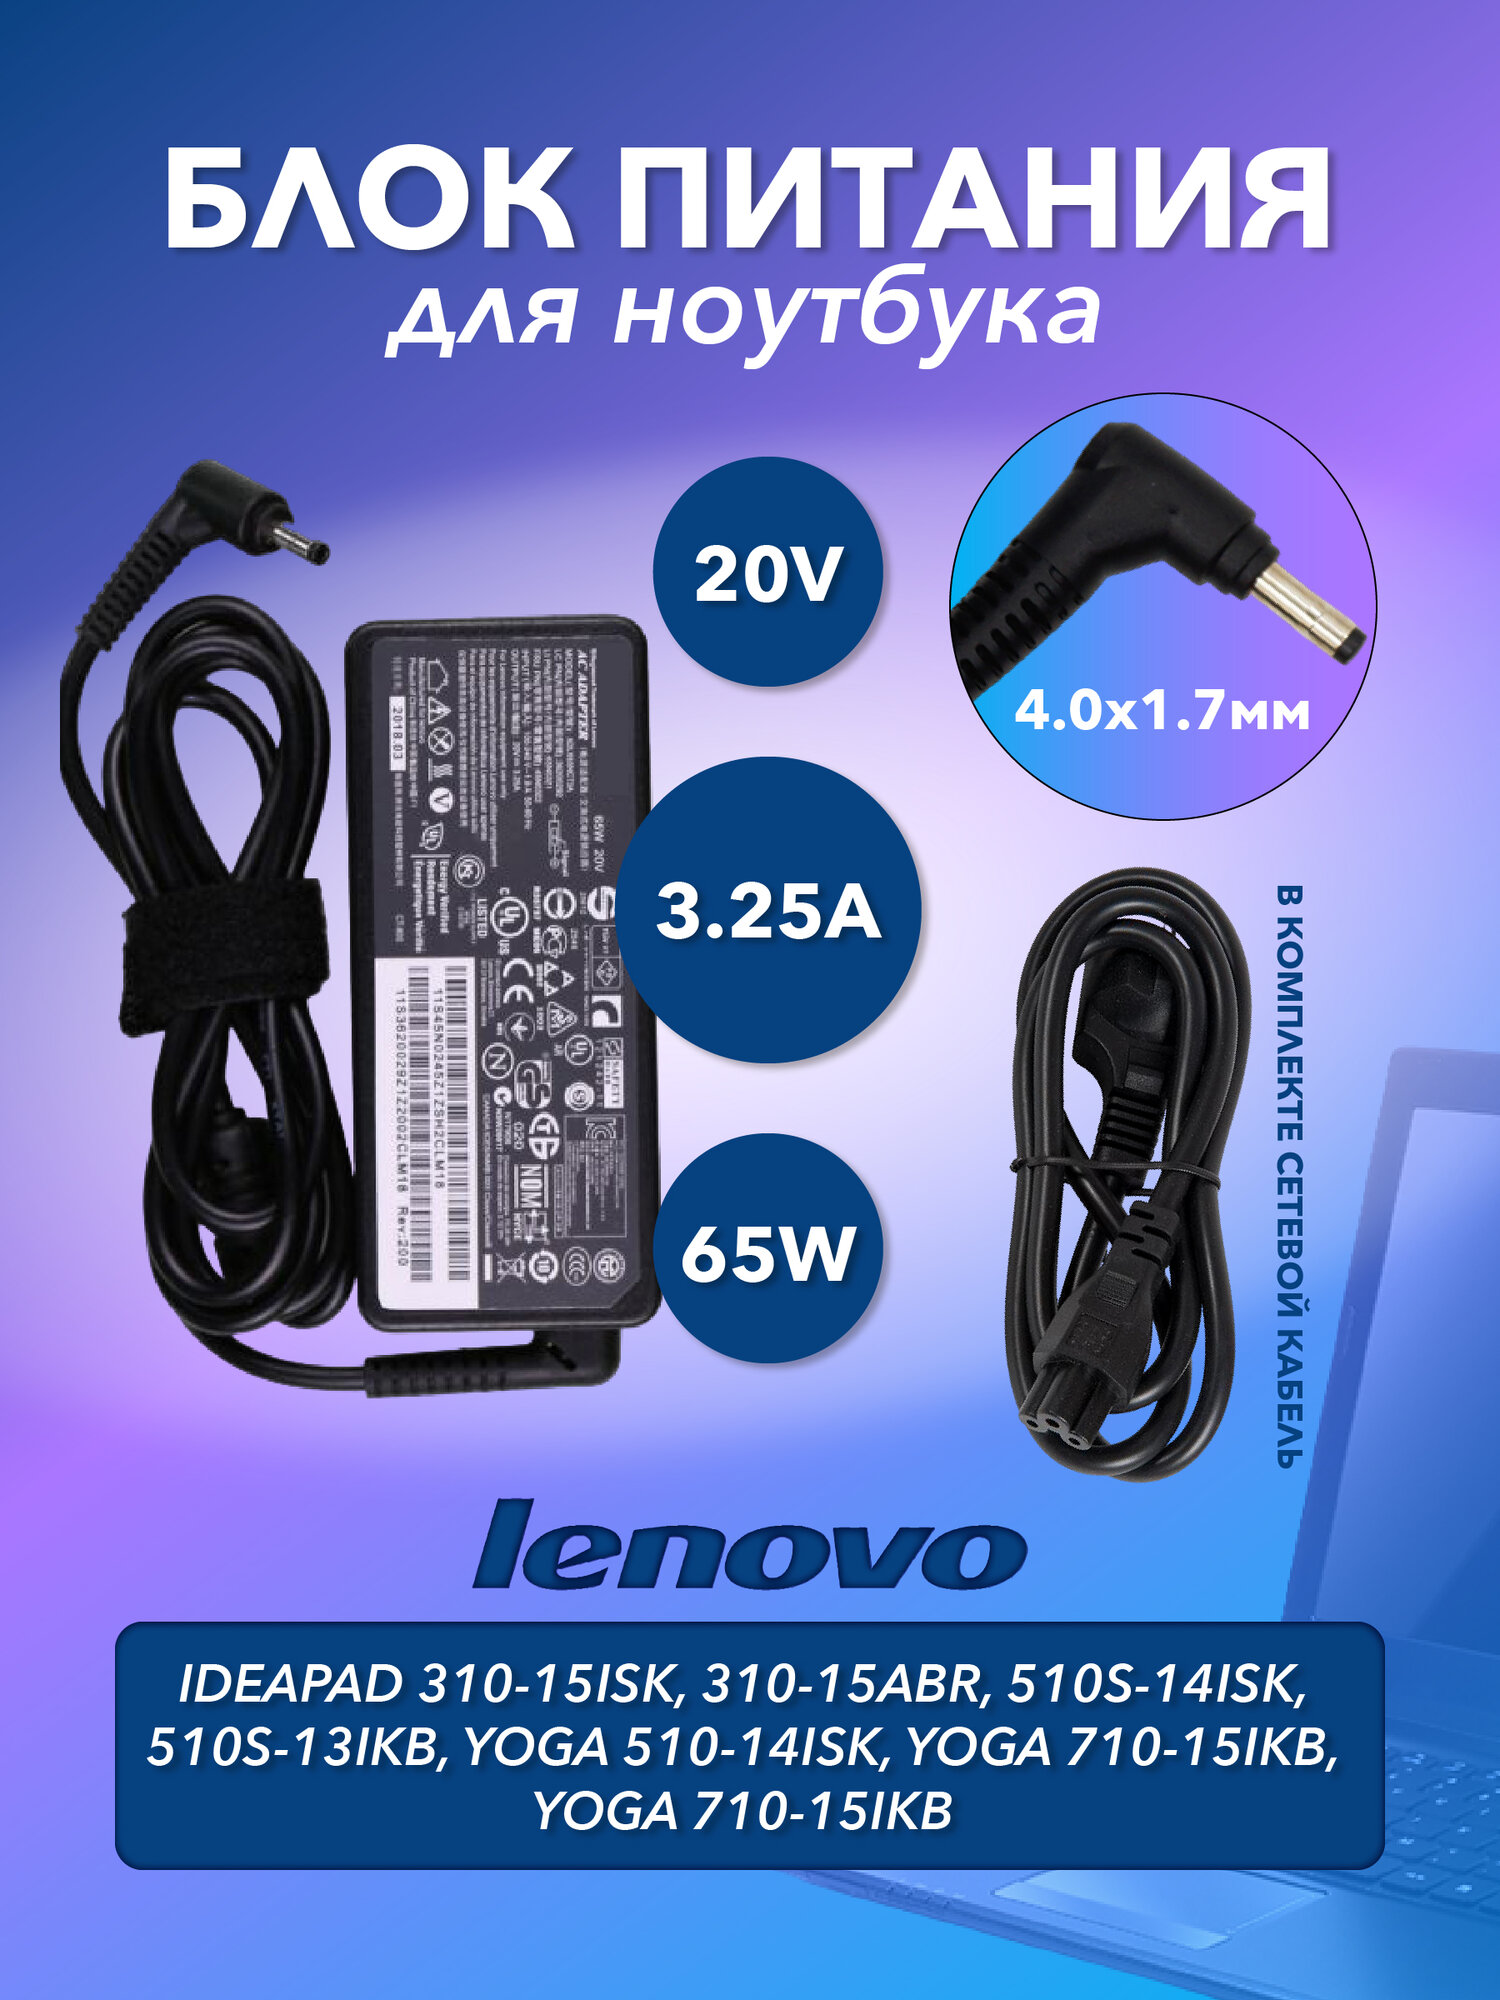 Блок питания БП для ноутбука Lenovo IdeaPad 310-15ISK, 310-15ABR, 510S-14ISK, 510S-13IKB, YOGA 510-14ISK, YOGA 710-15IKB, 20V, 3.25A, 65W 4.0х1.7